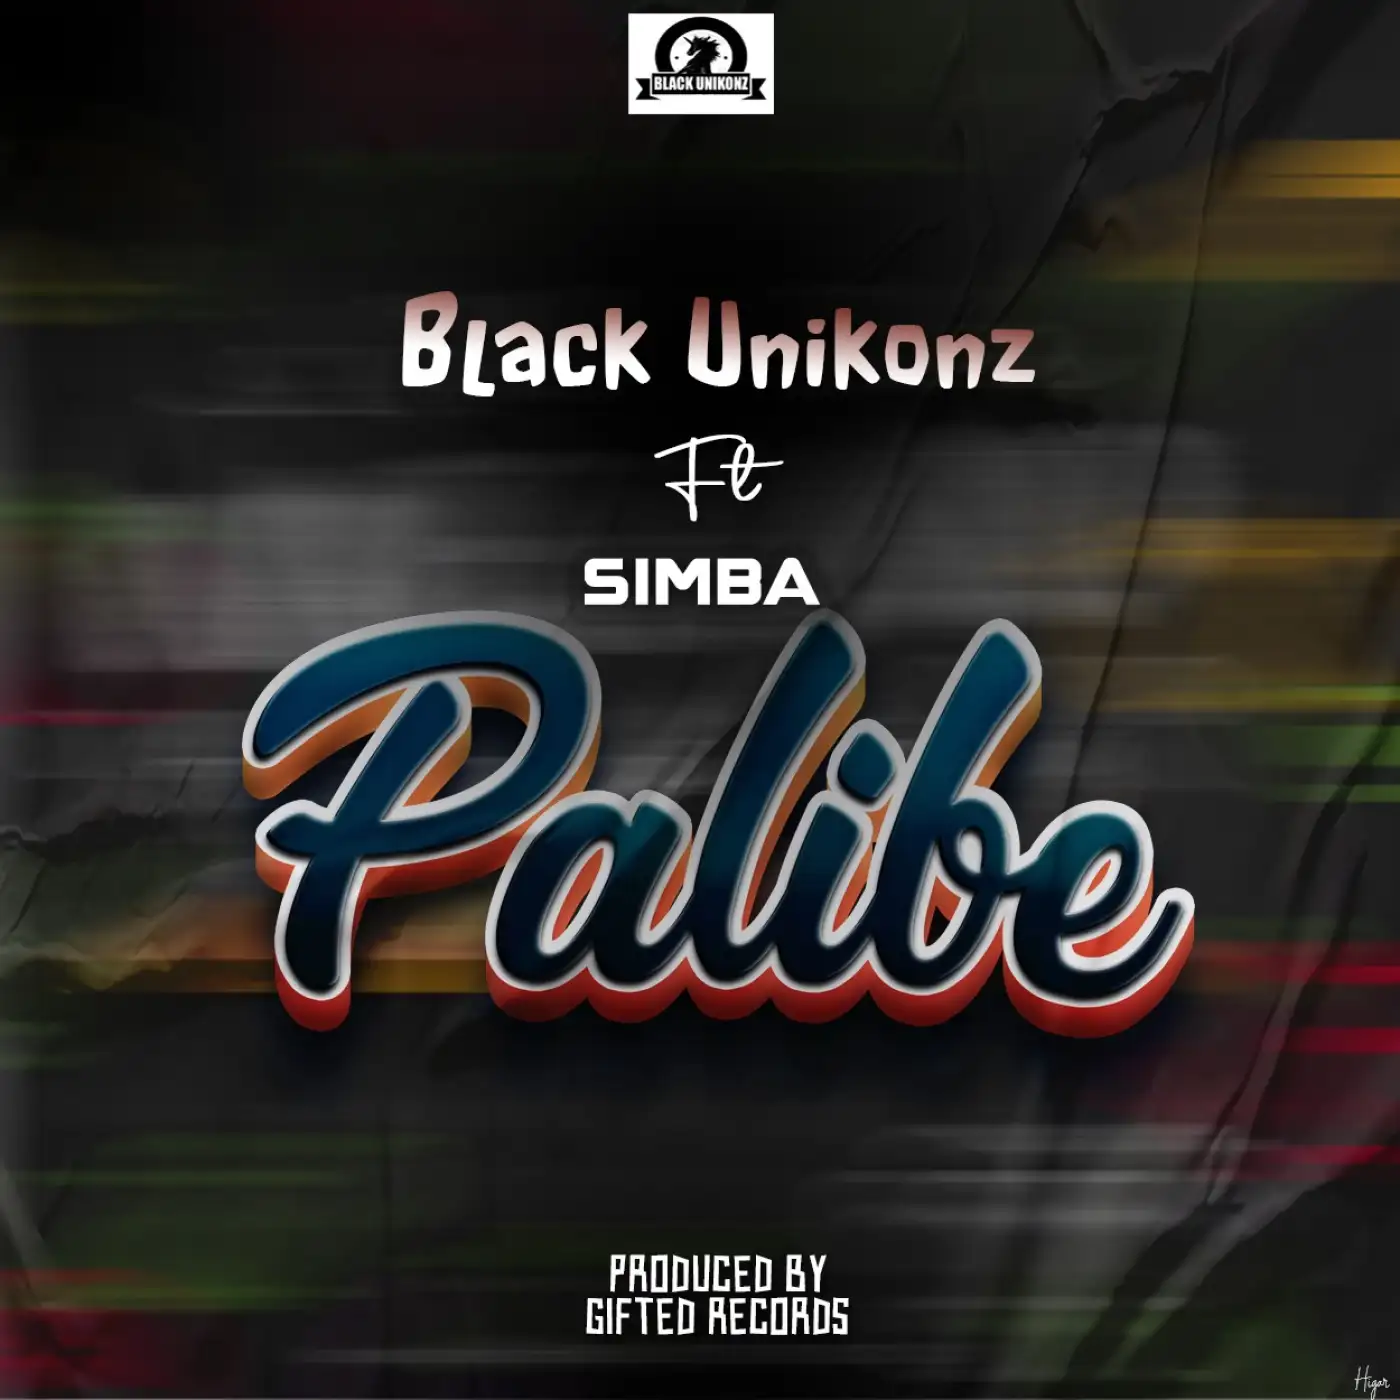 BLACKUNIKONZ-BLACKUNIKONZ - Palibe Ft Simba (Prod. Gifted Records)-song artwork cover